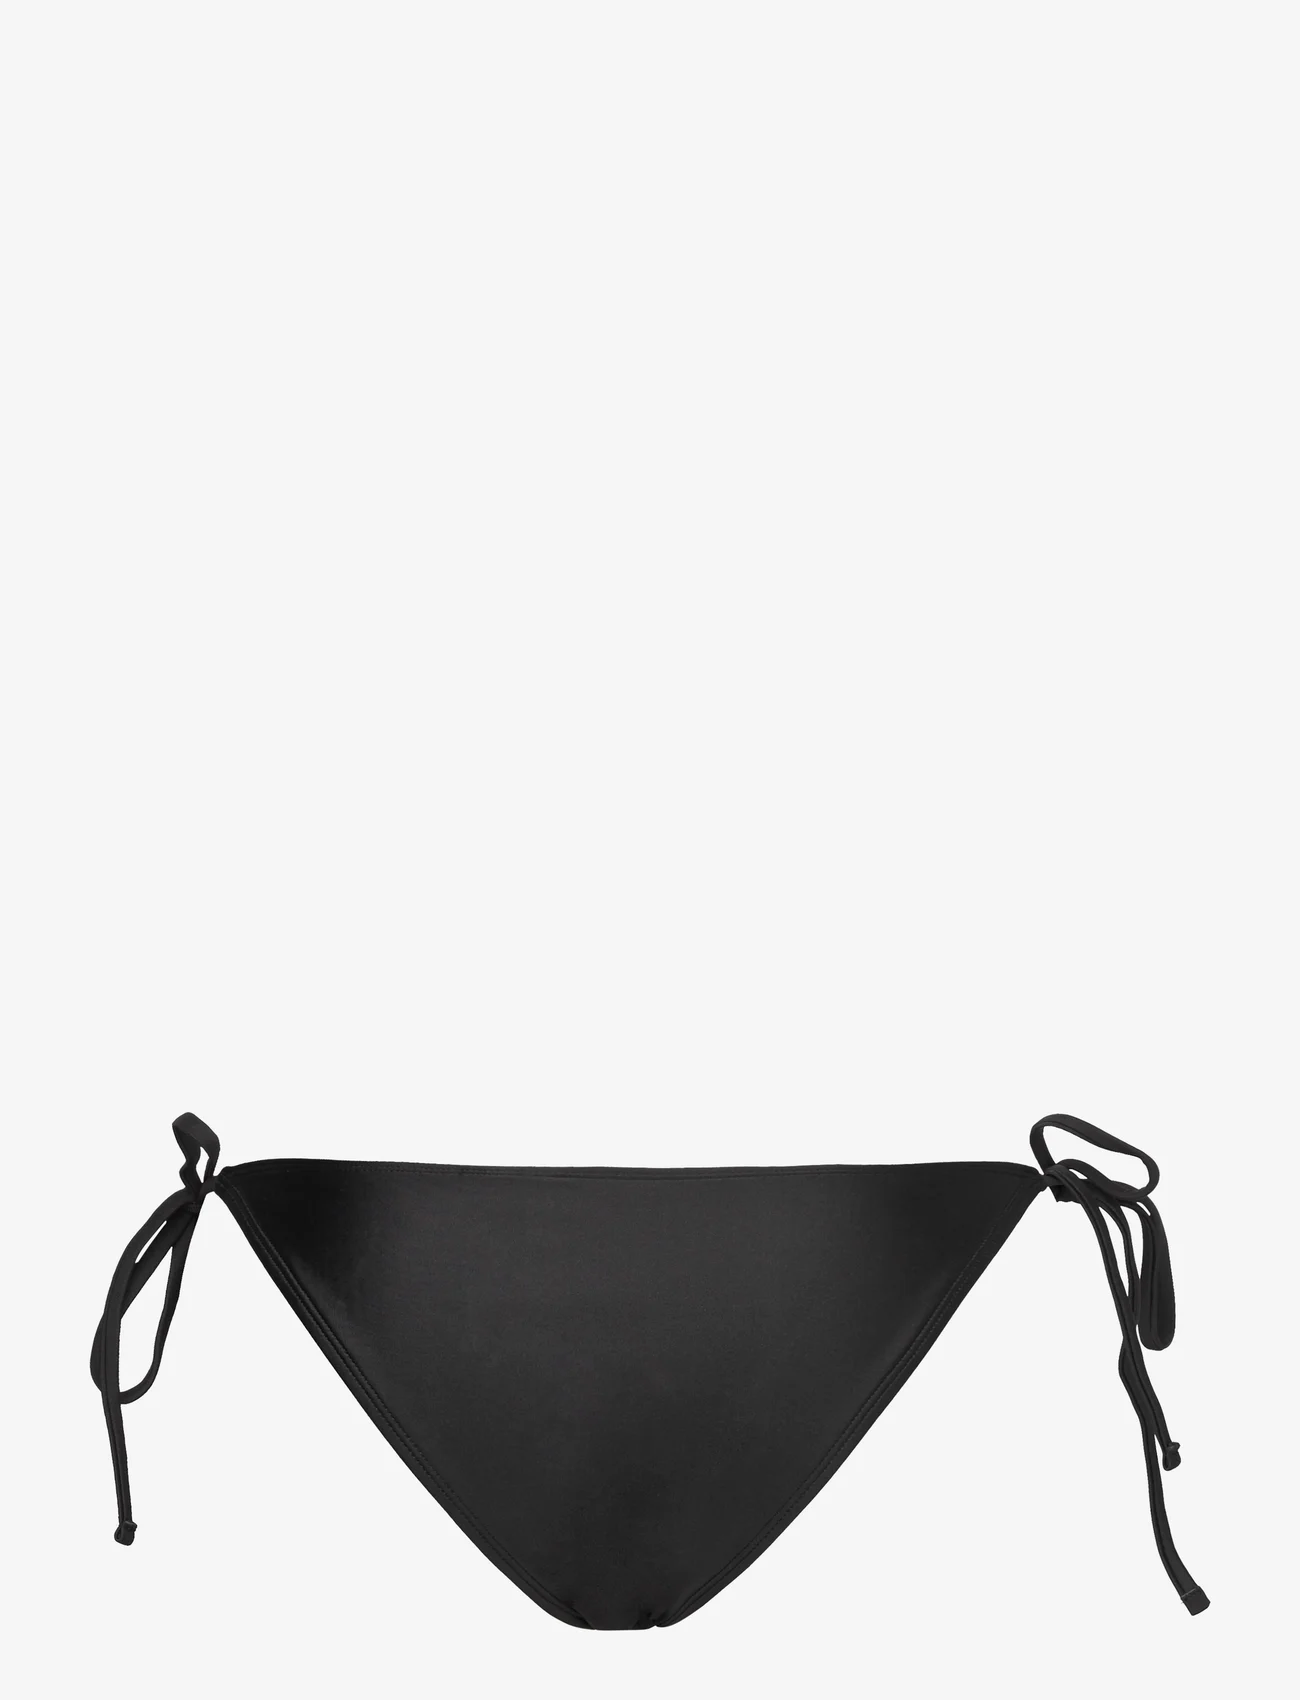 Rosemunde - Bikini brief low waist - bikini's met bandjes opzij - black - 1